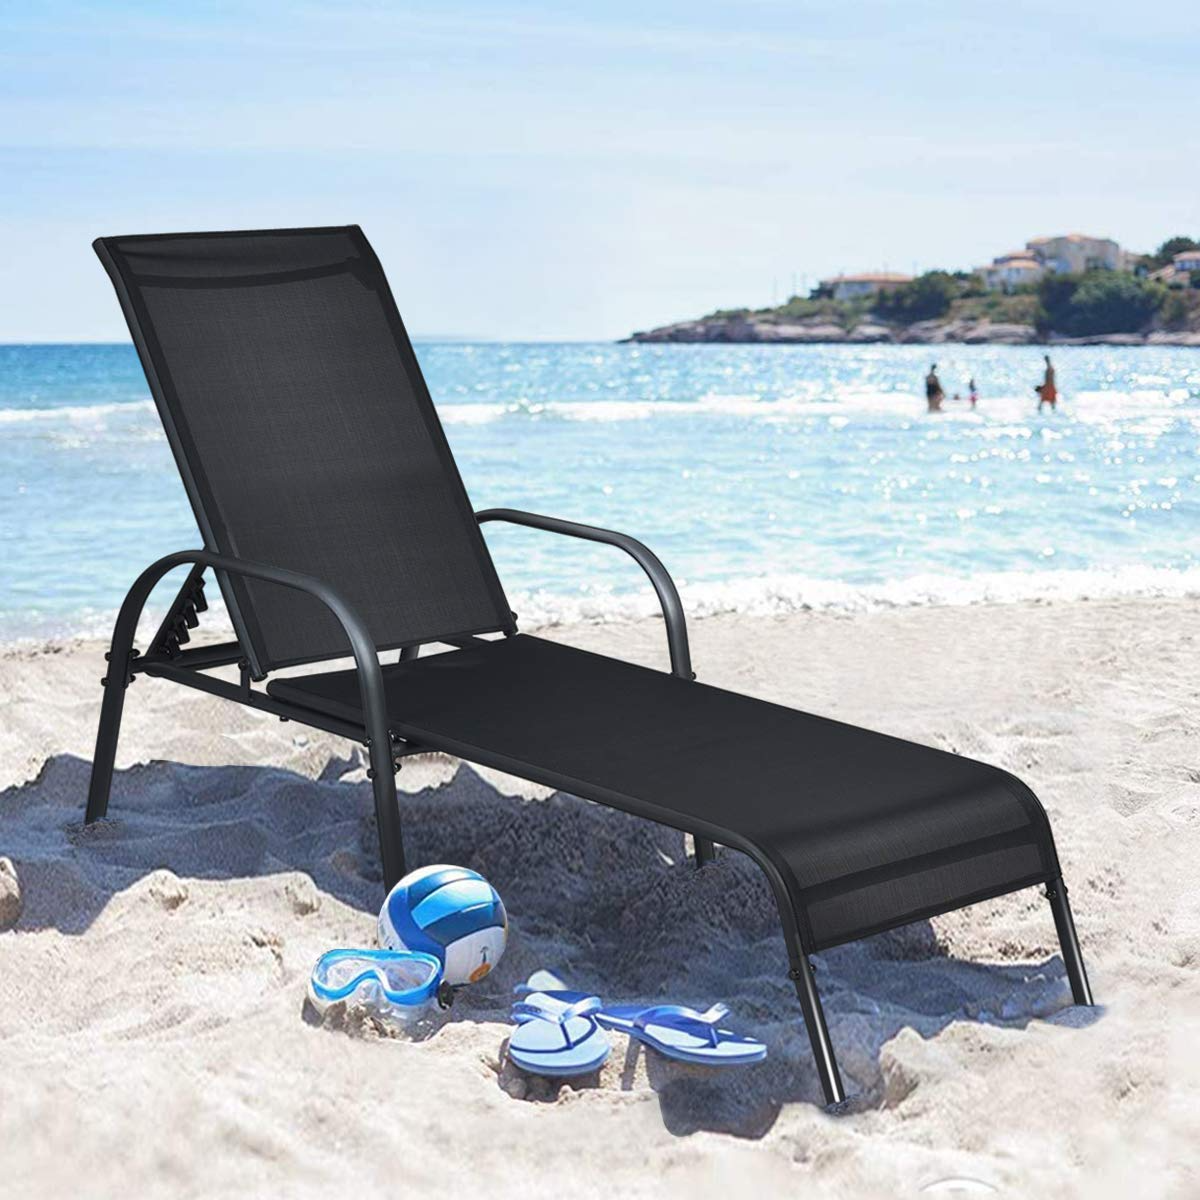 Giantex 2 Pcs Outdoor Chaise Lounge Chair